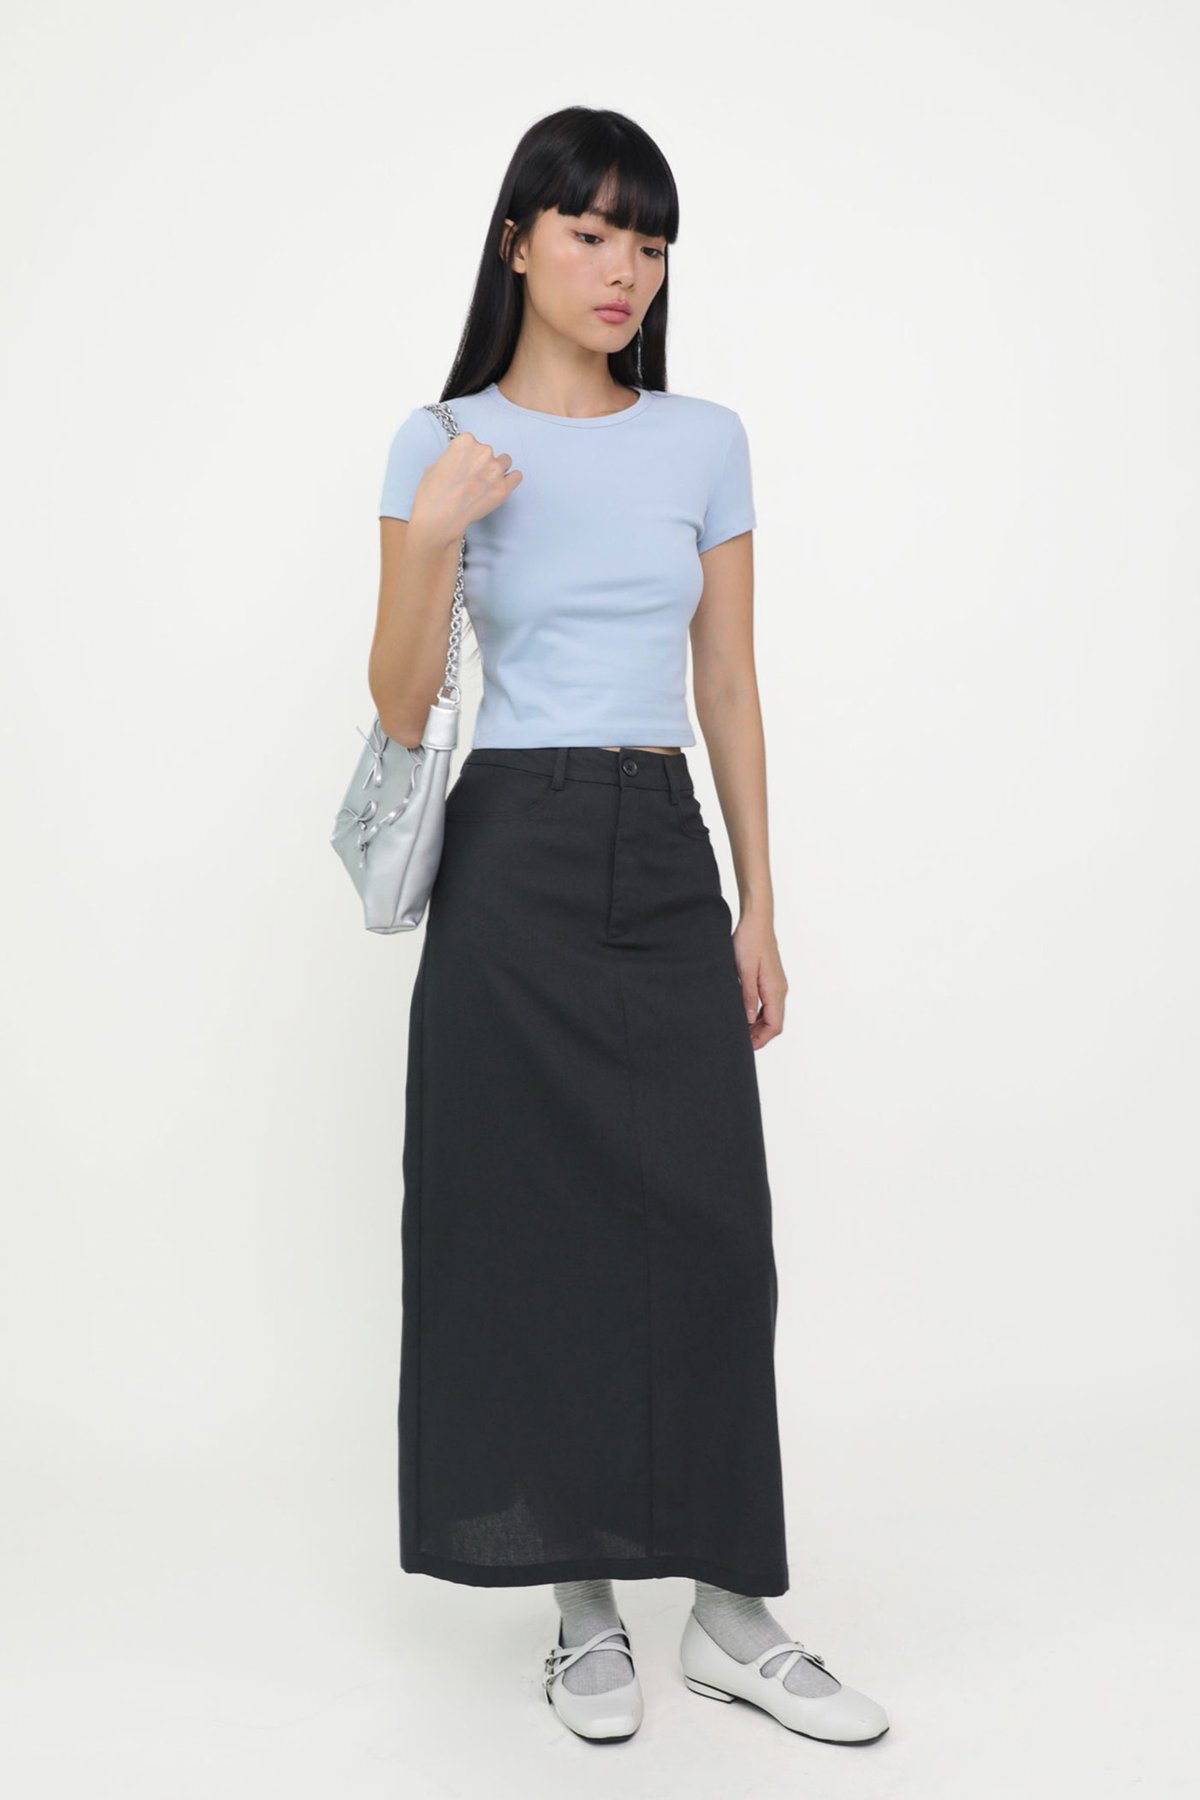 Tacci Tailored Linen Skirt (Graphite)